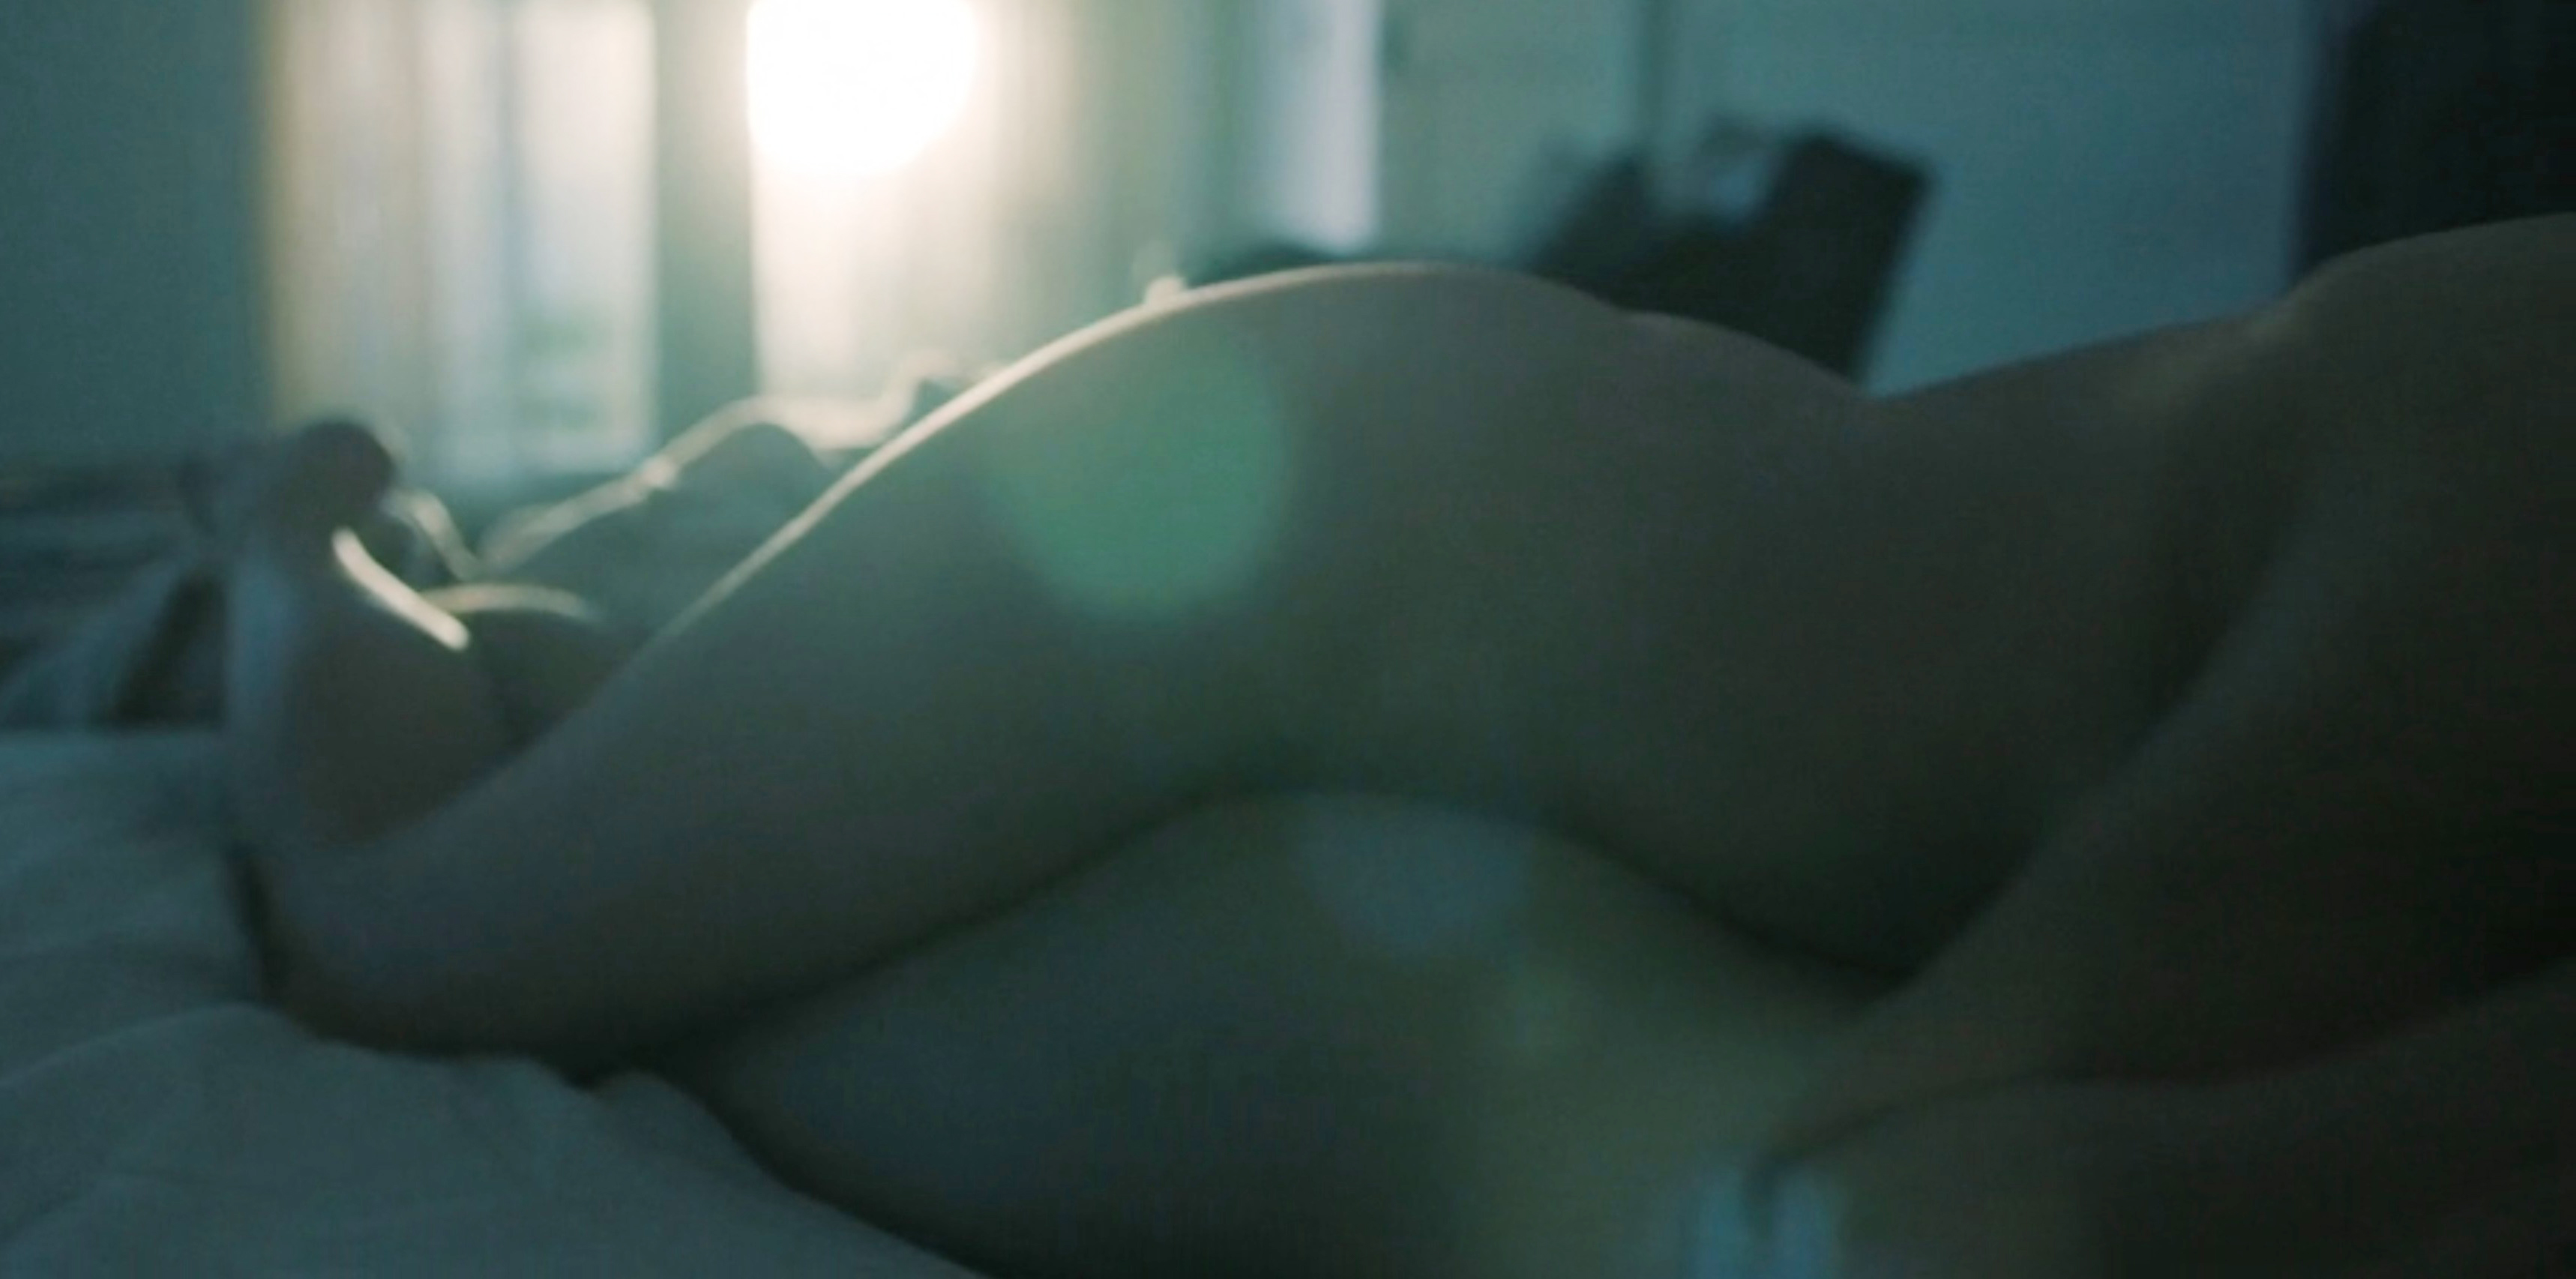 chico gordon share jennifer aniston nude sex scene photos